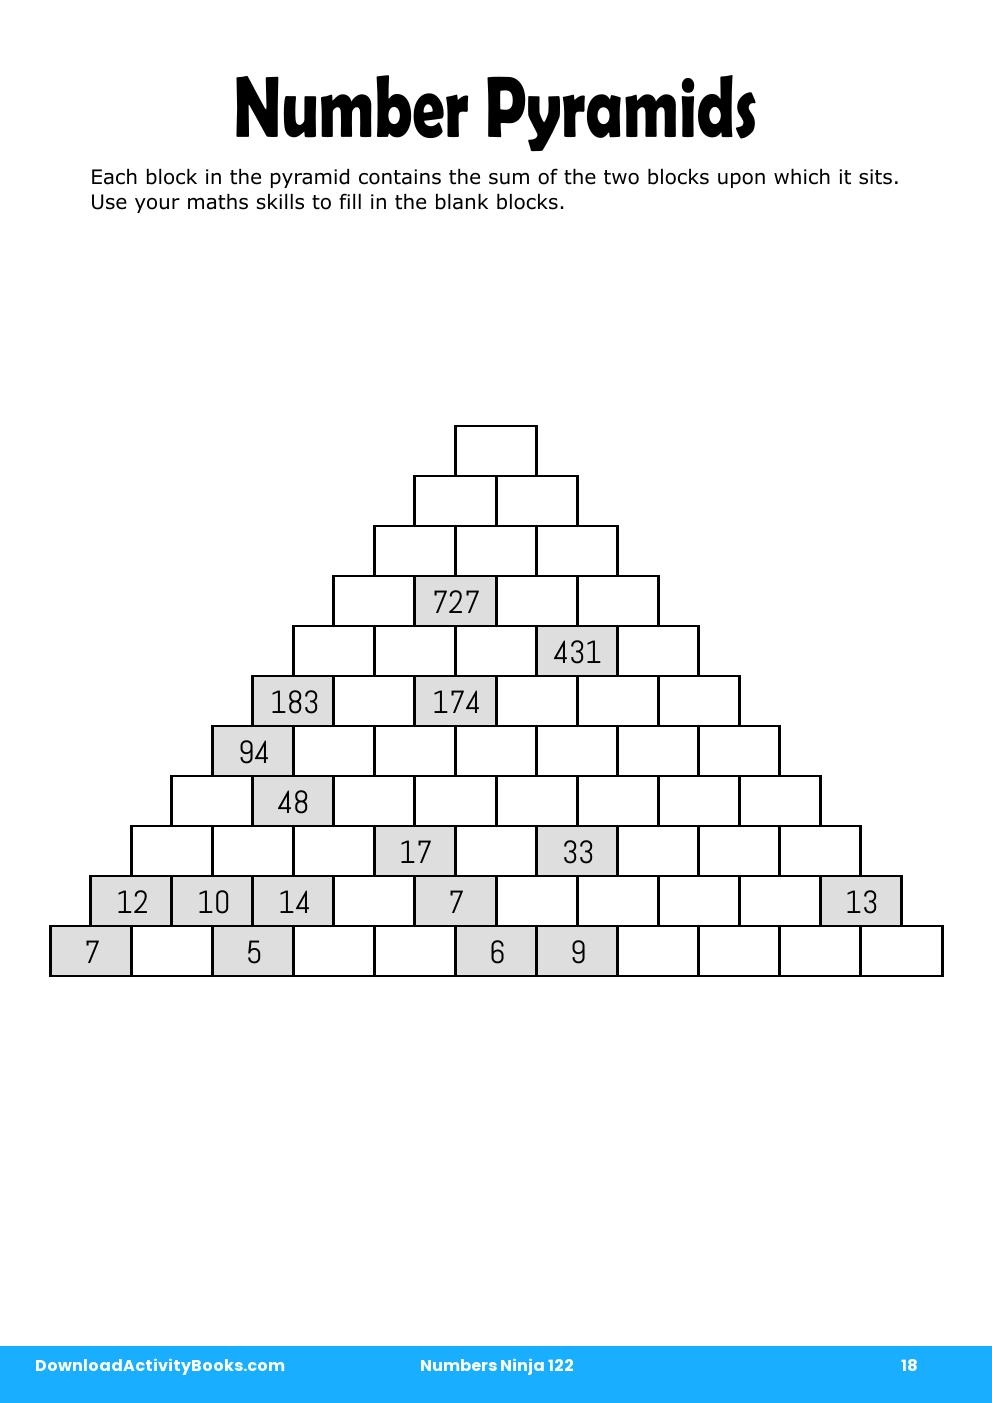 Number Pyramids in Numbers Ninja 122